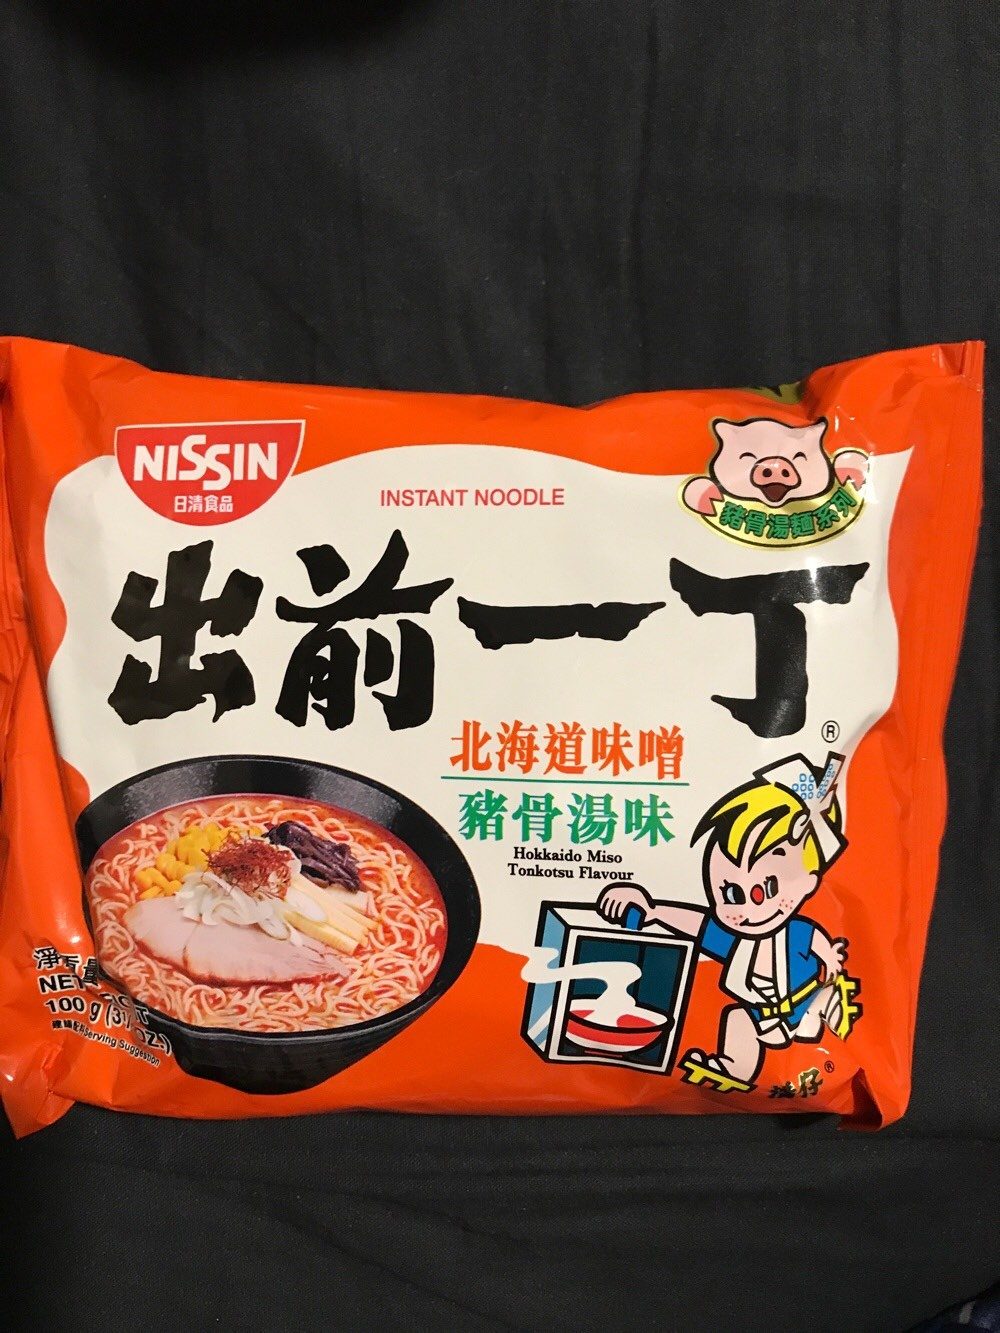 Nissin Instant Noodle Hokkaido Miso Tonkotsu Flavour,100G - Product - en